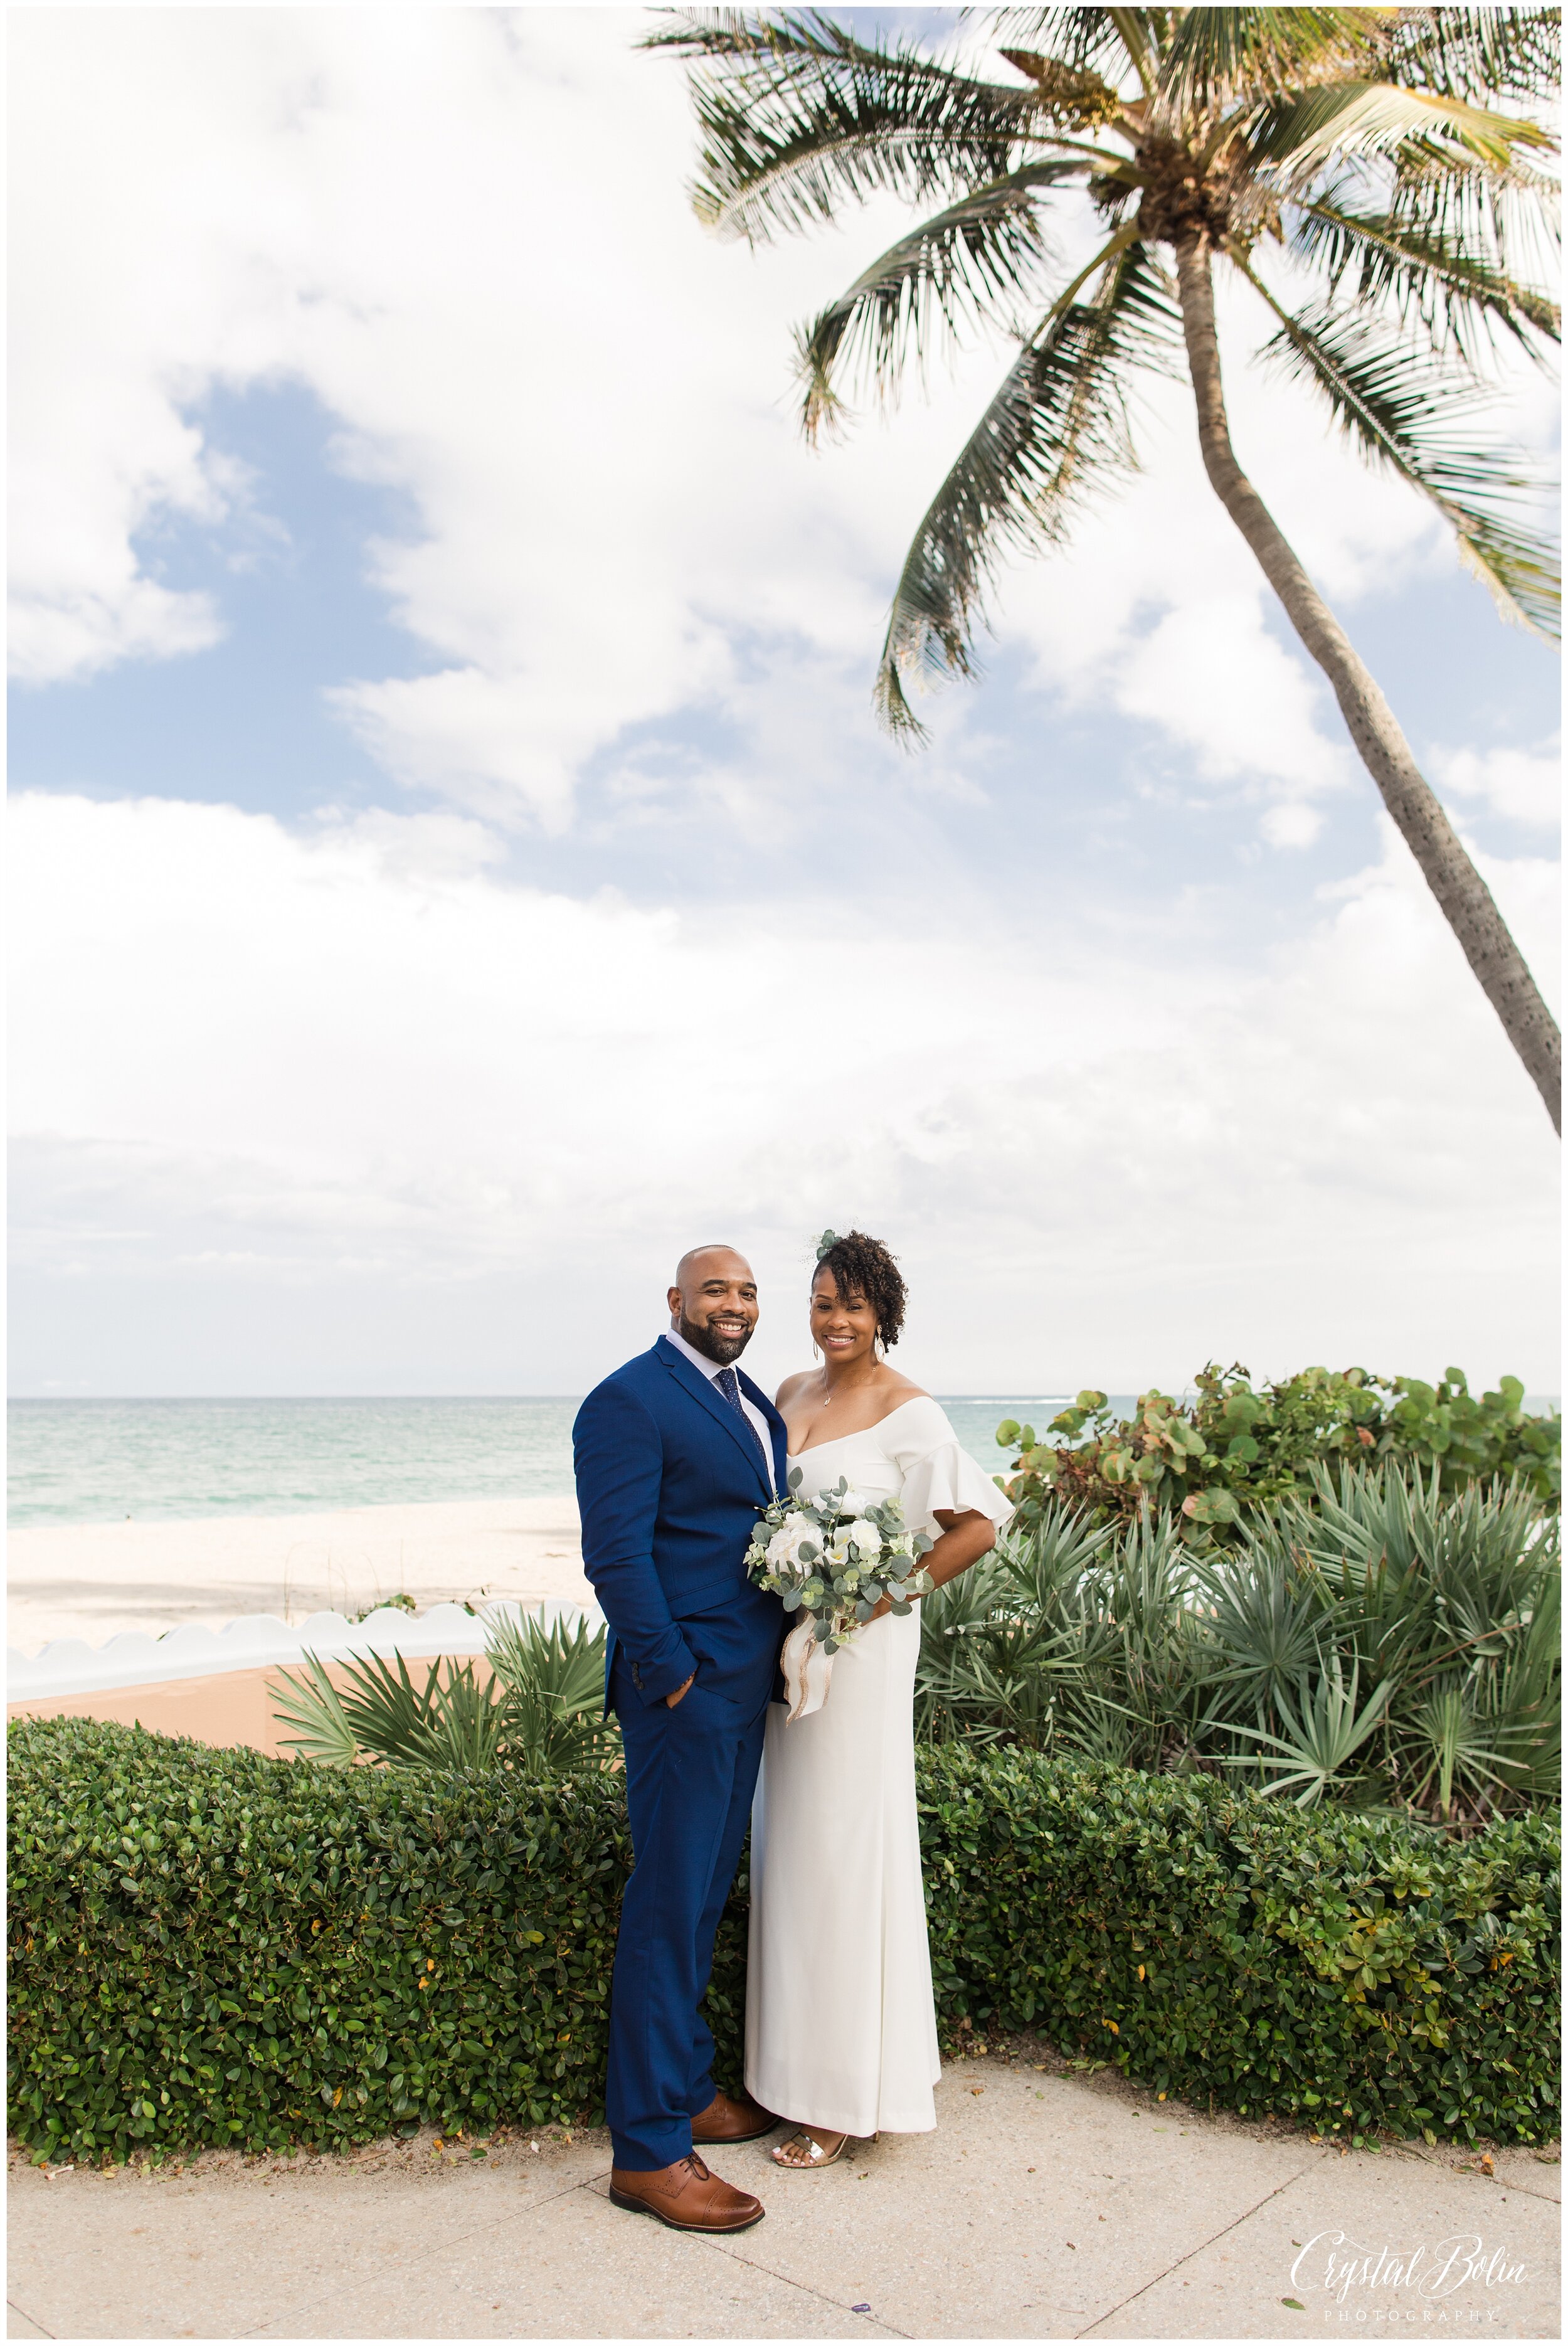 Courtney & Rick's Wedding | Worth Avenue, Palm Beach 2020